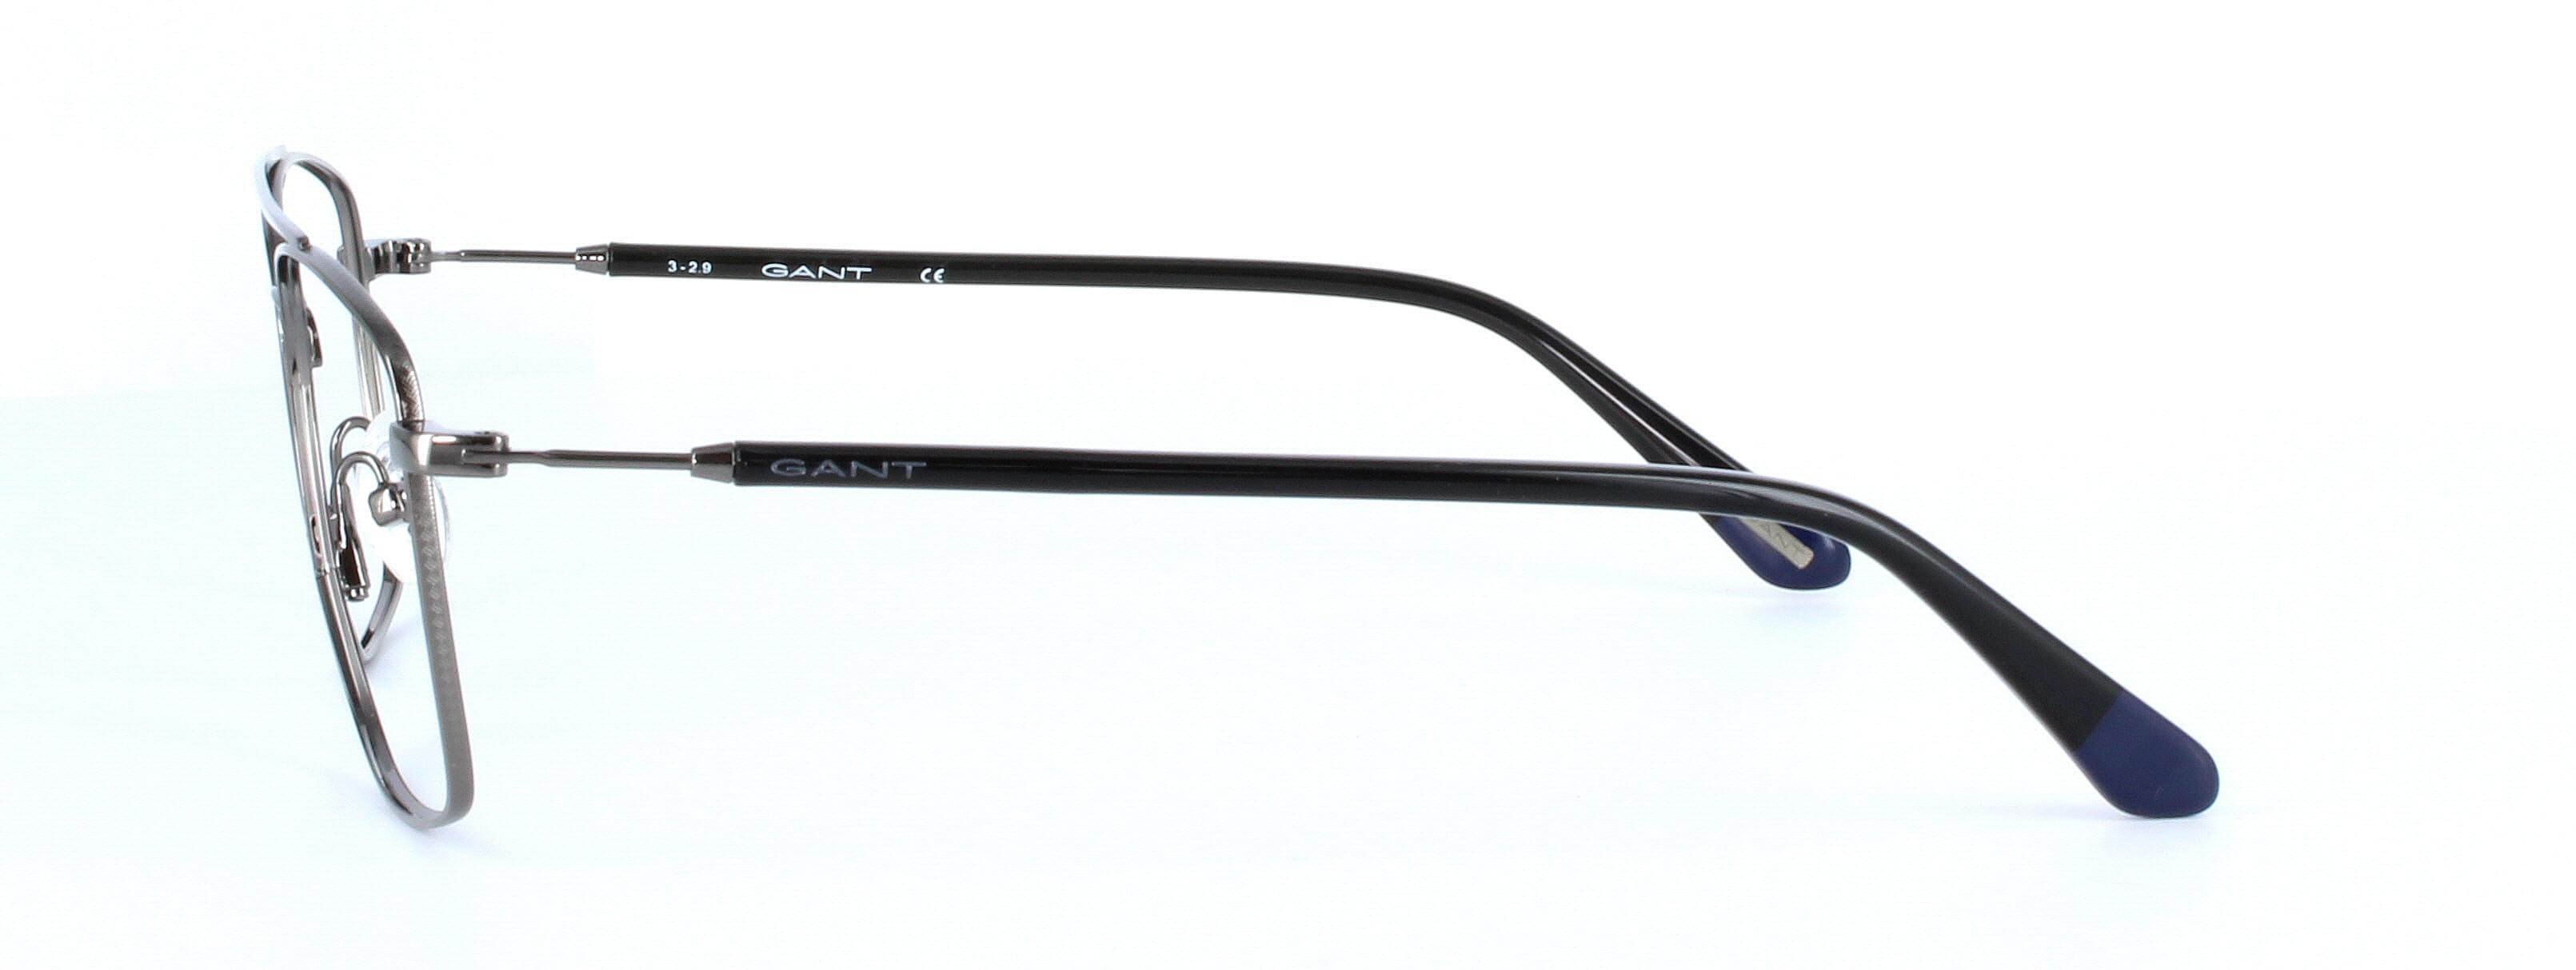 GANT 3194 - Gents aviator style metal glasses in gunmetal - image view 2